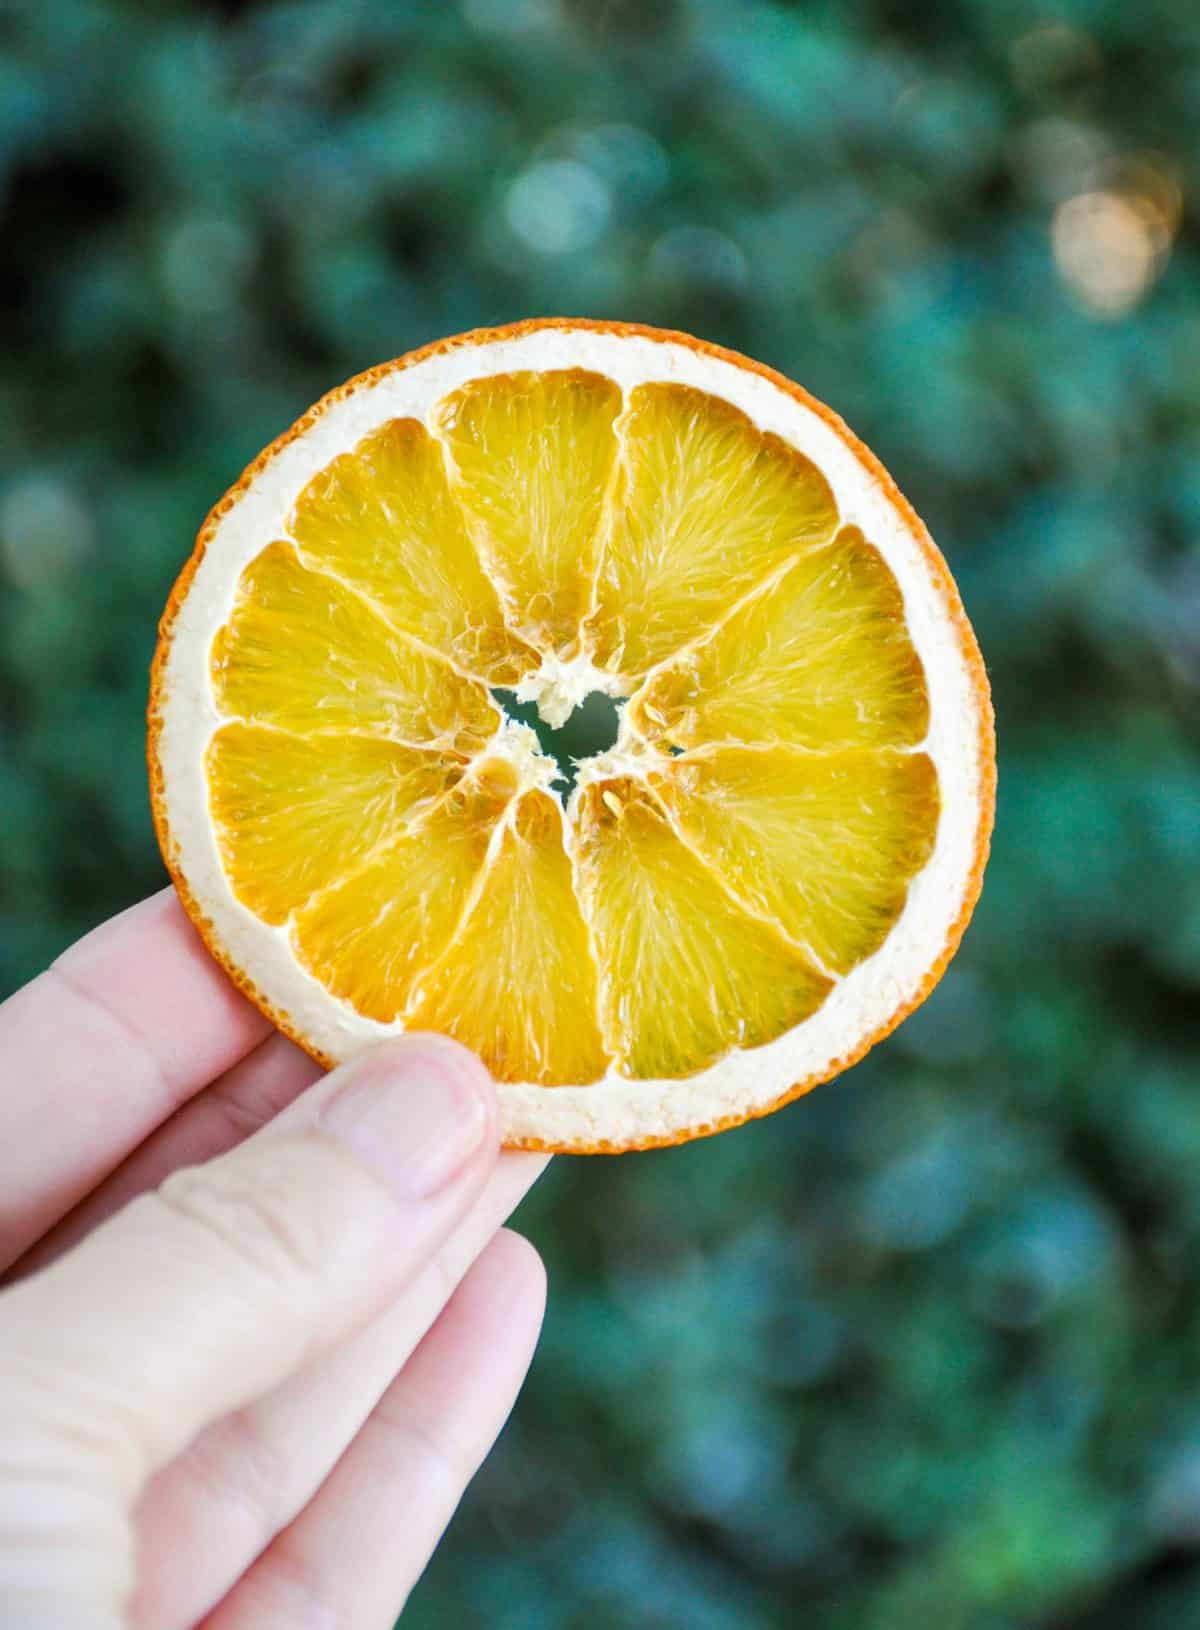 slice of dried citrus